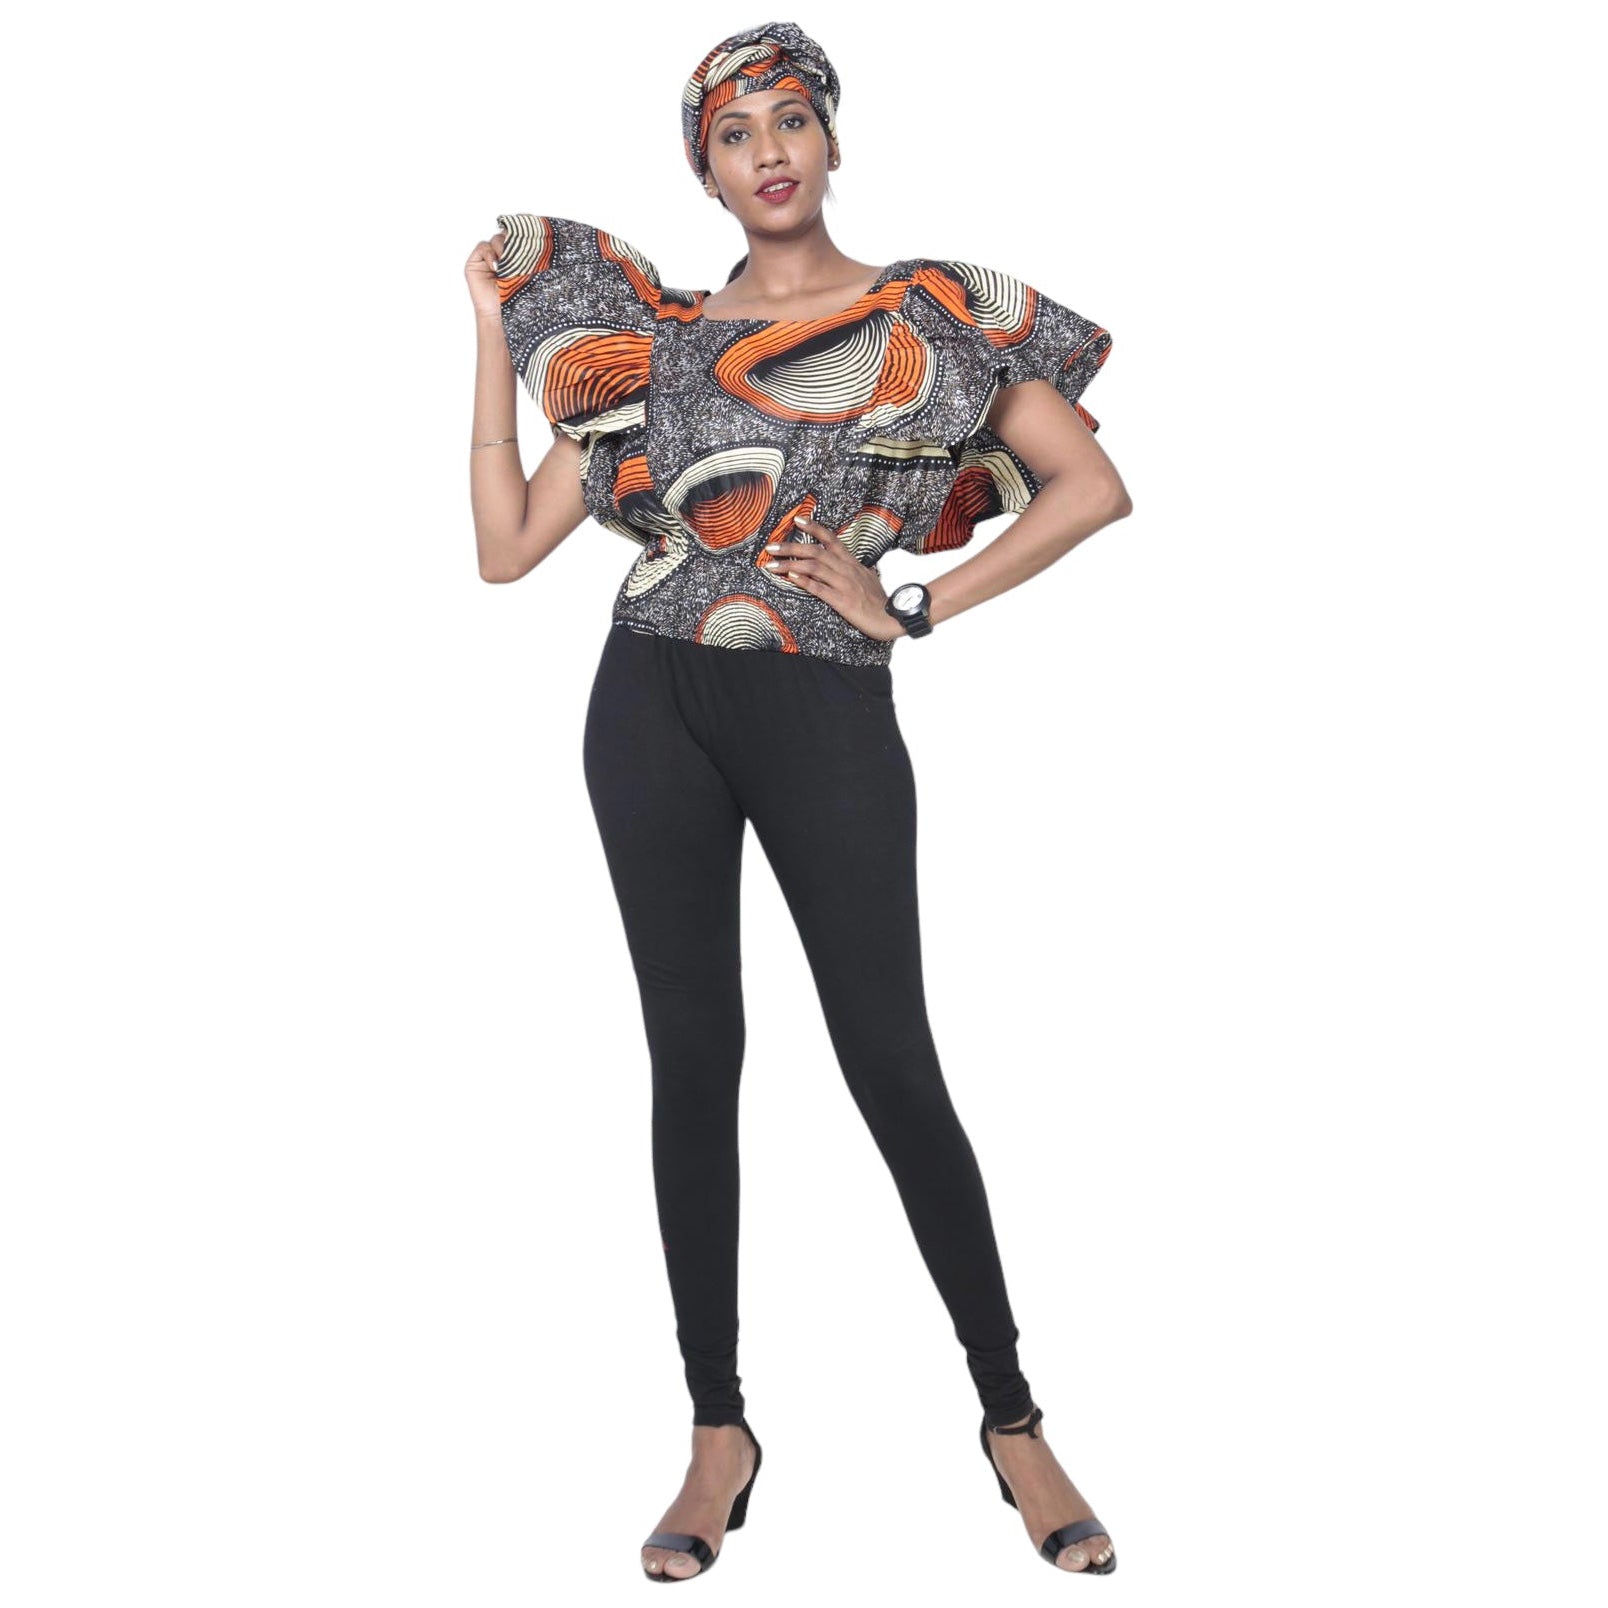 Women's African Print Short Sleeve Top